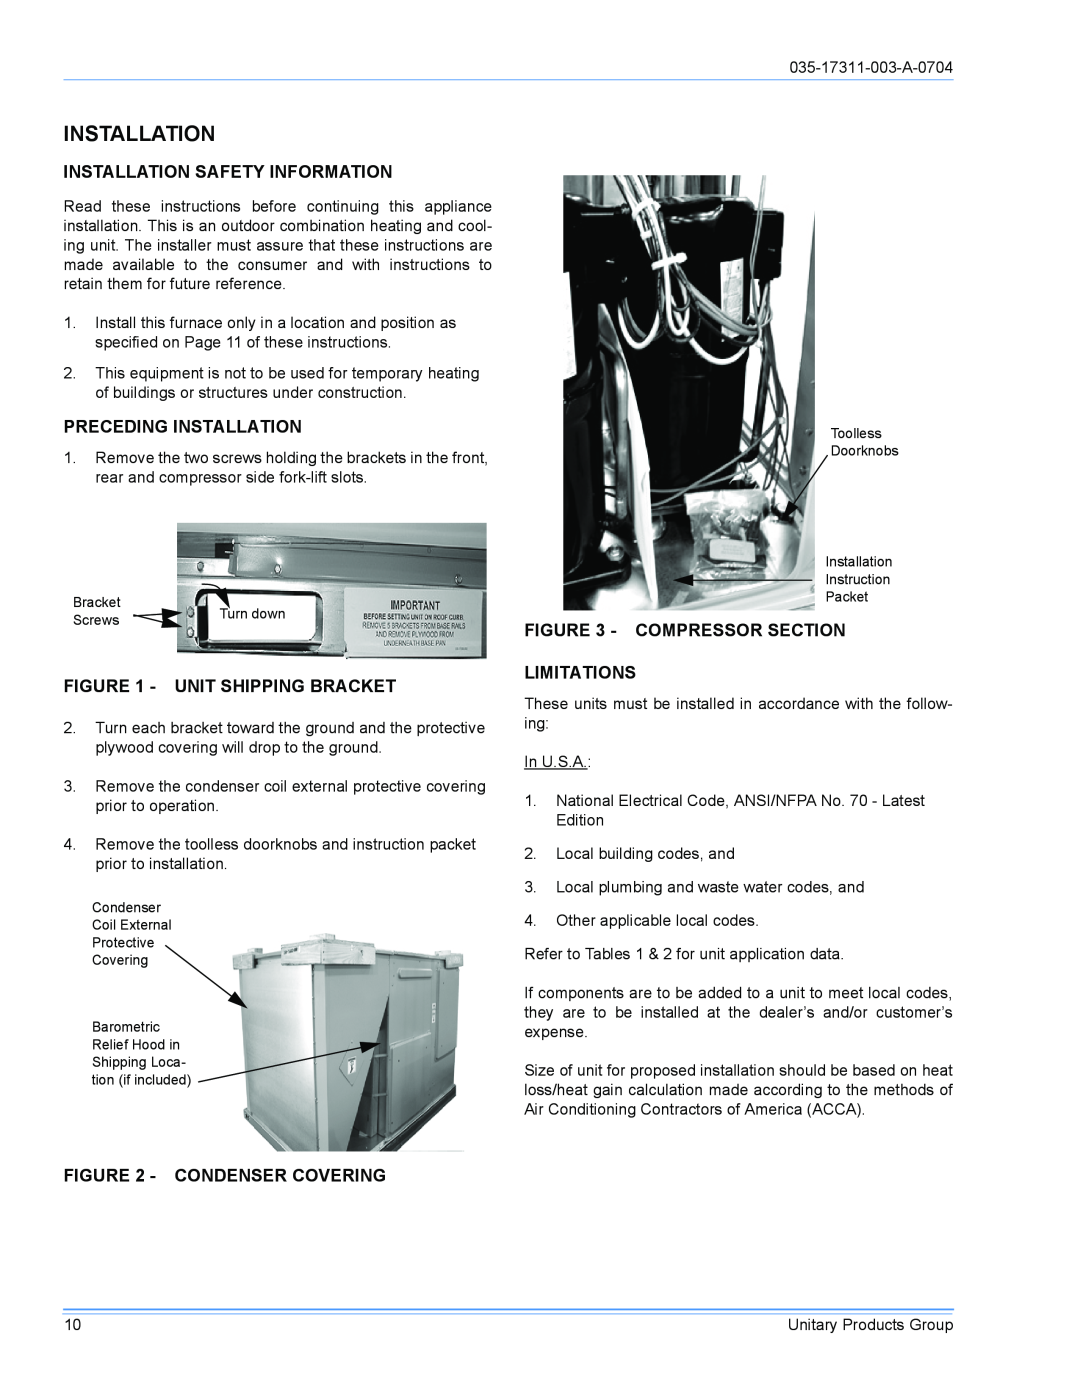 York DM090 Installation Safety Information, Preceding Installation, Unit Shipping Bracket, Condenser Covering 